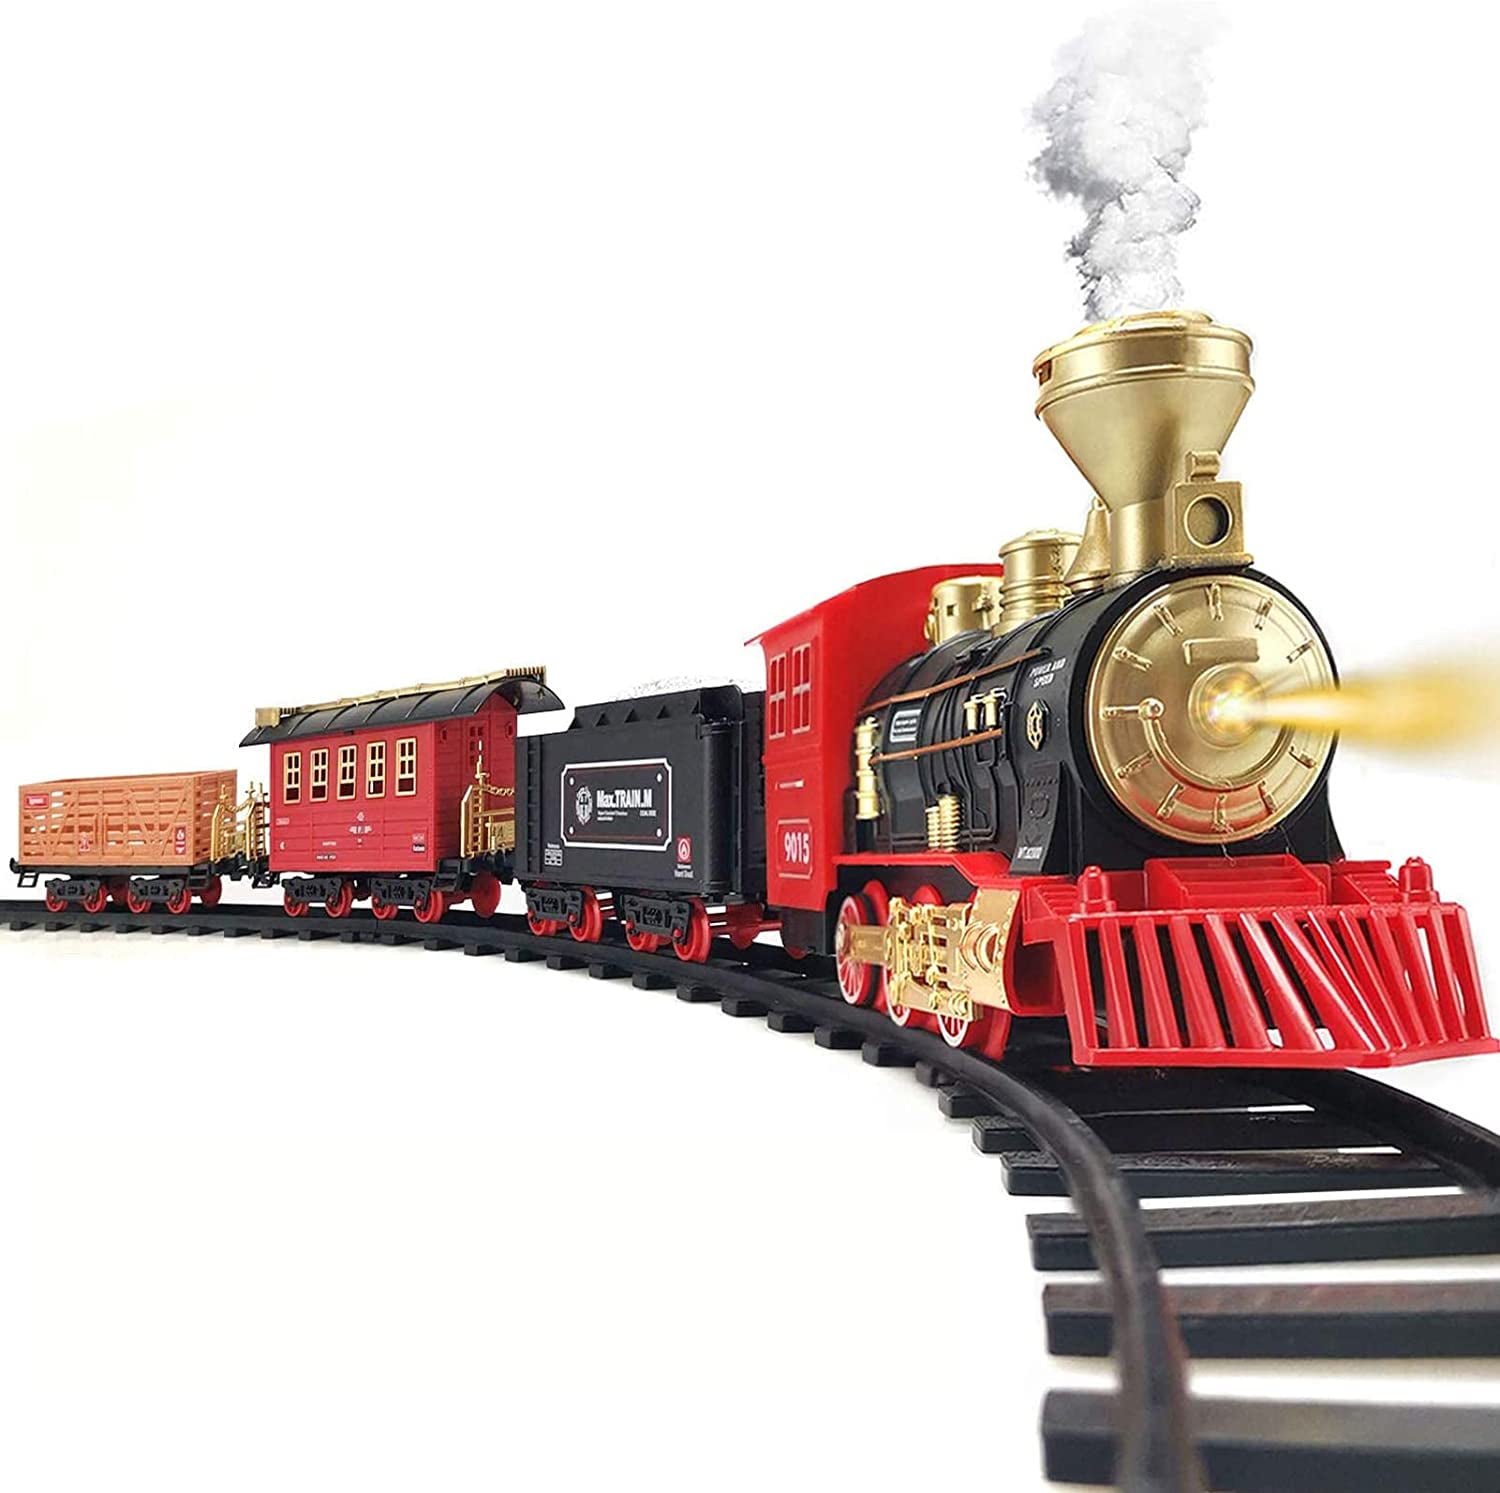 Train Set - 2020 Updated Electric Train Toy for Boys Girls w/ Smokes,  Lights & Sound, Railway Kits w/ Steam Locomotive Engine, Cargo Cars &  Tracks, 